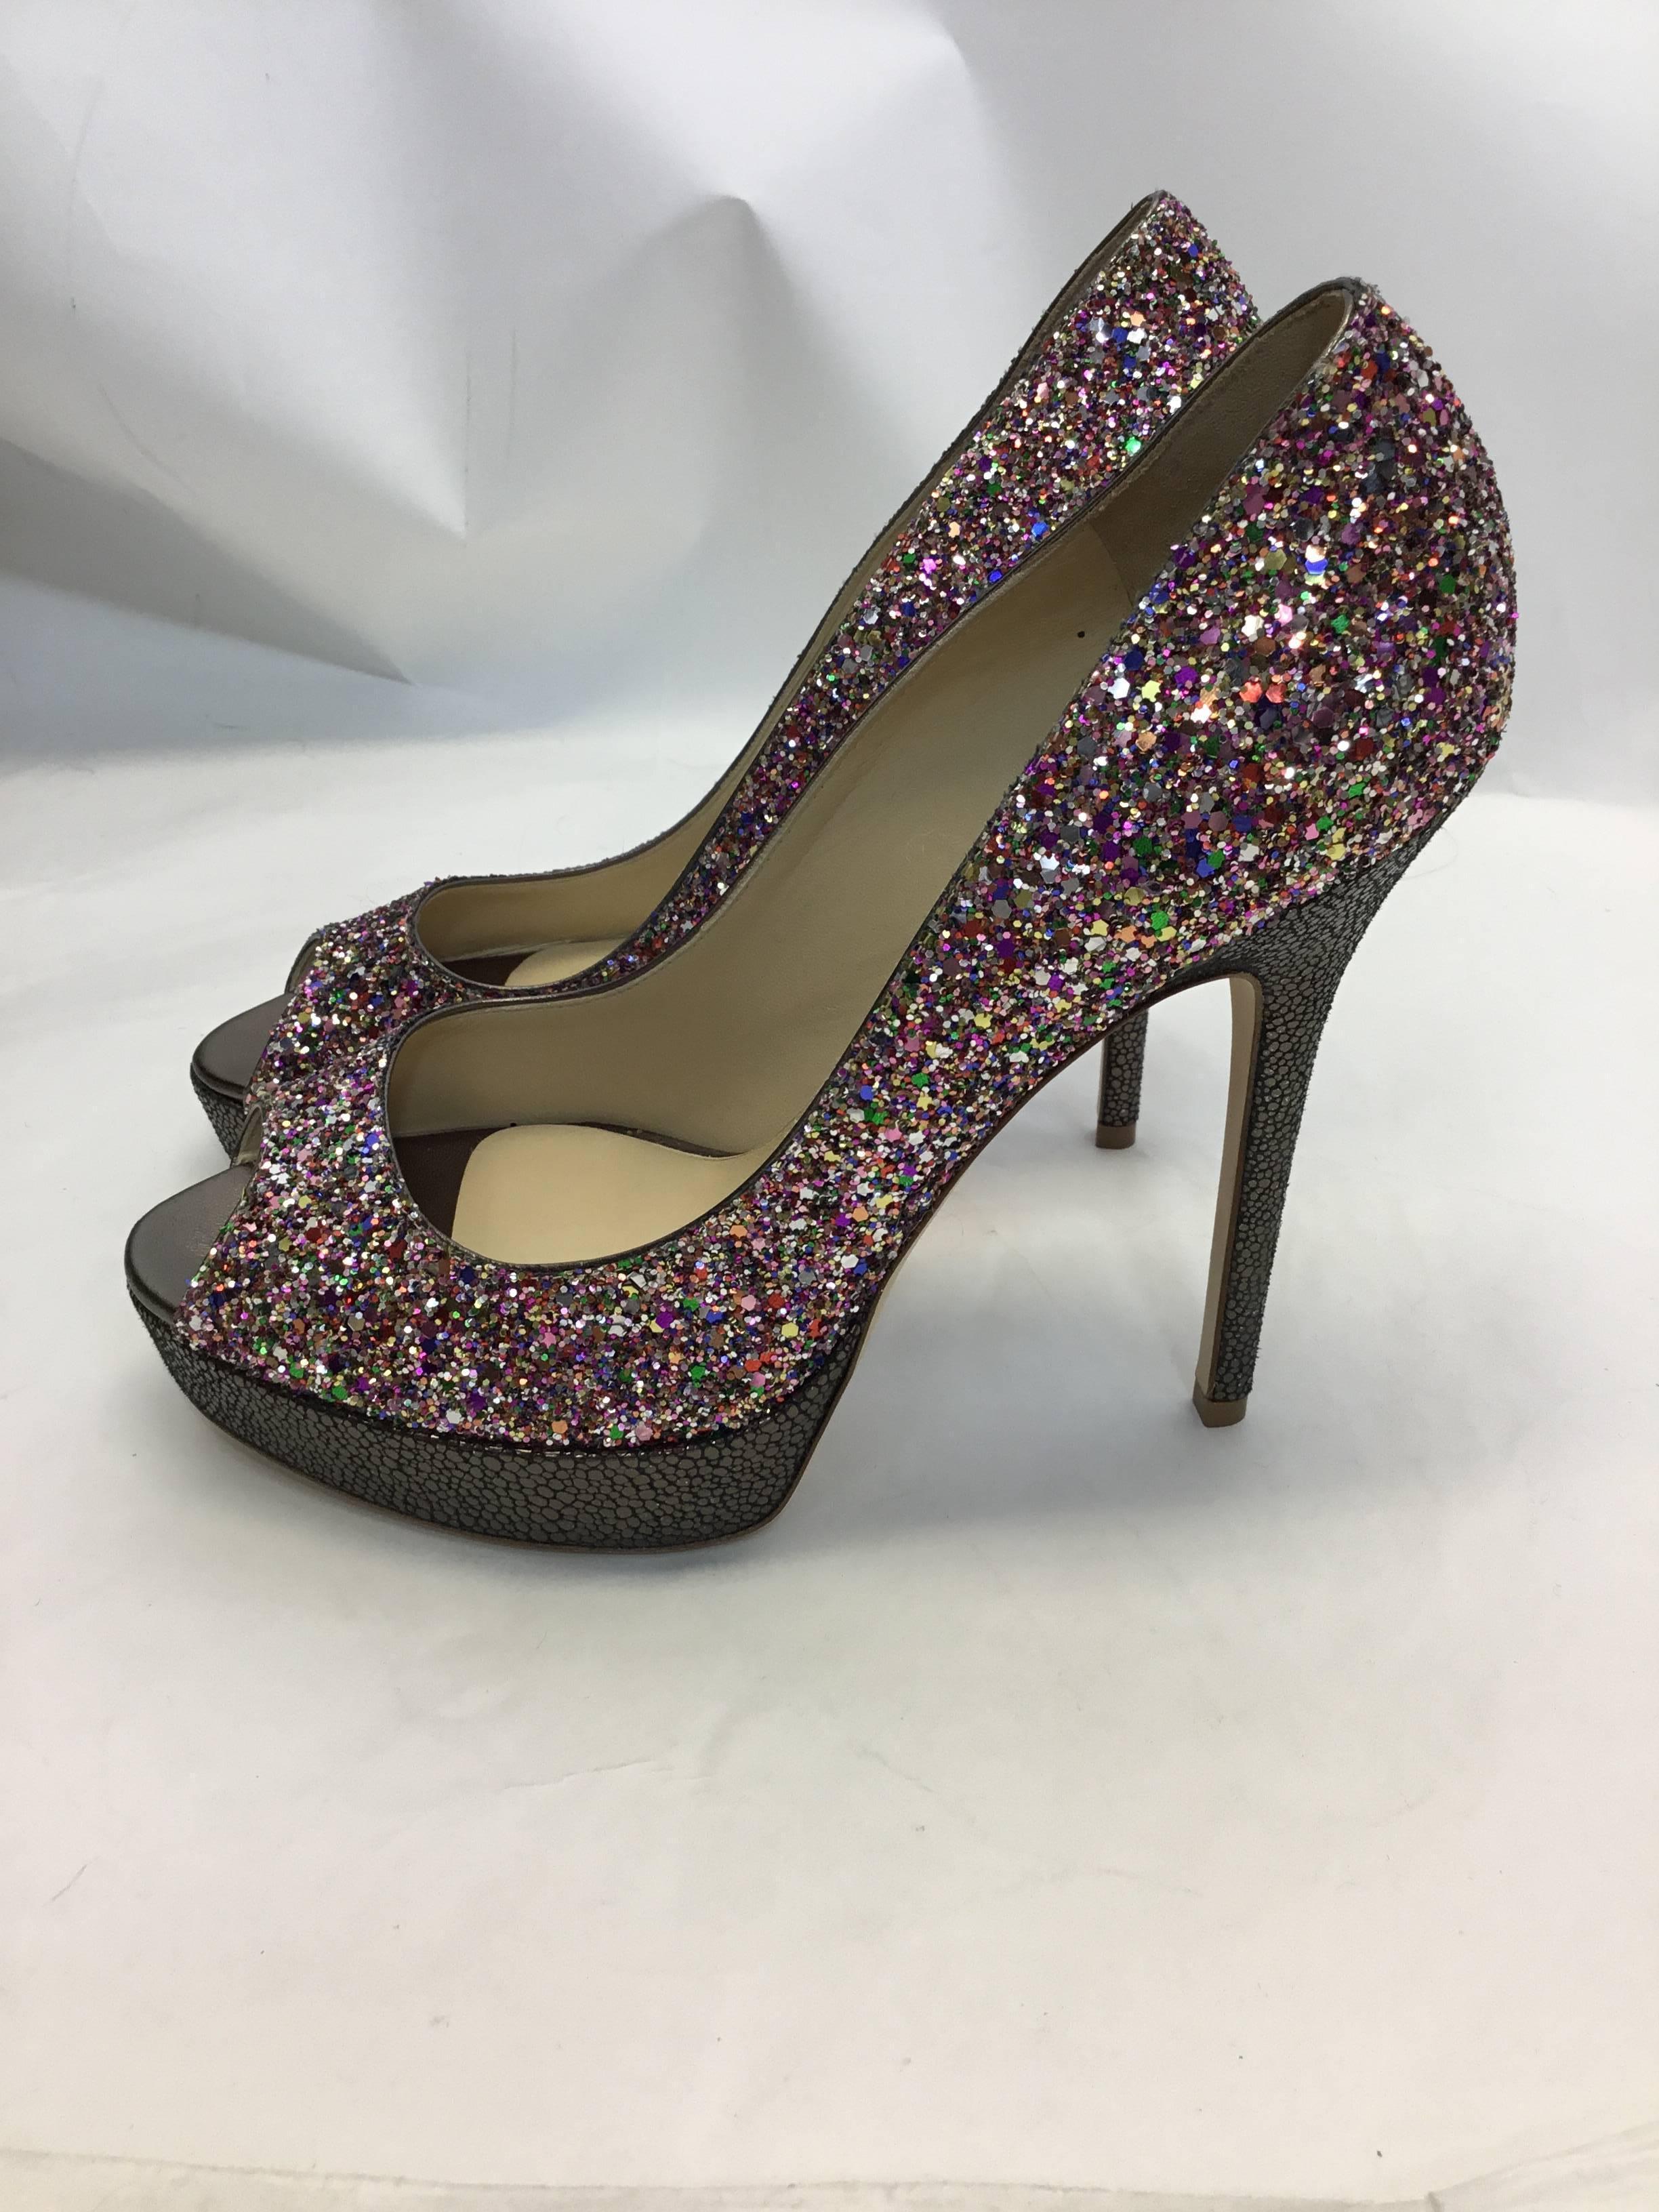 Jimmy Choo New Glitter & Snake Printed Stilletos
$599
Size 38.5
5 inch heel, one inch platform
Made in Italy